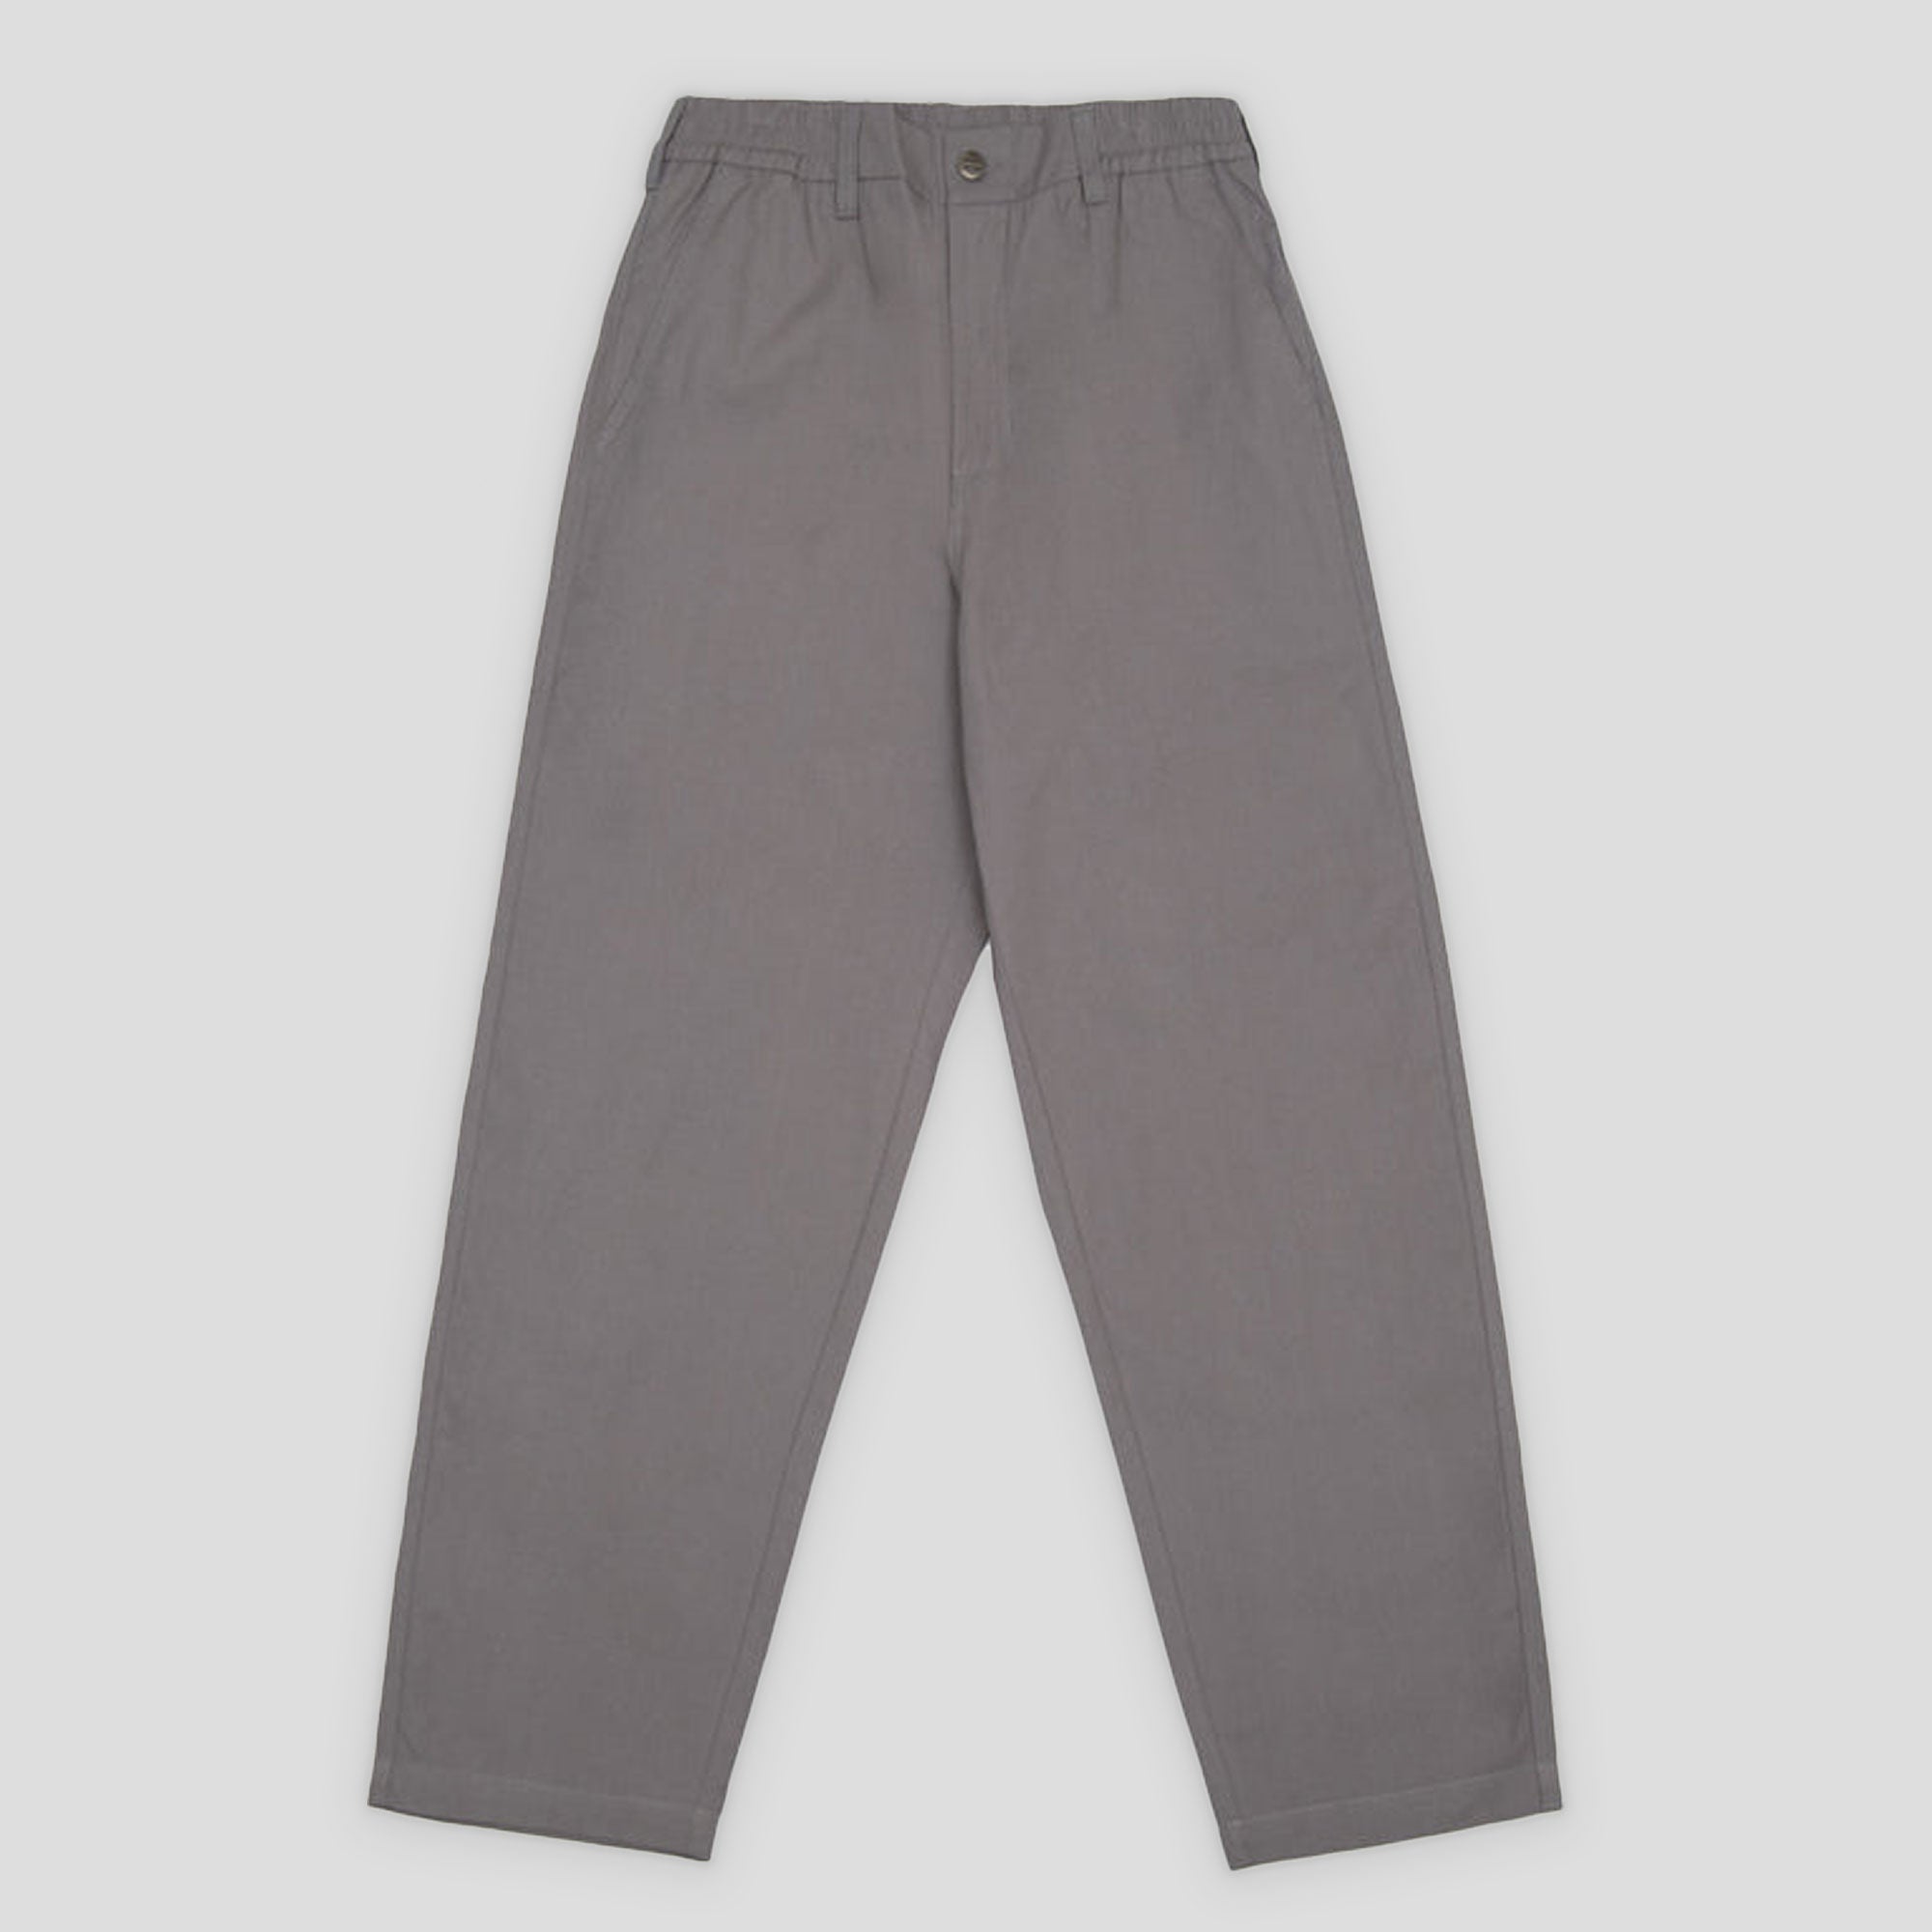 WKND Loosies Pants - Grey